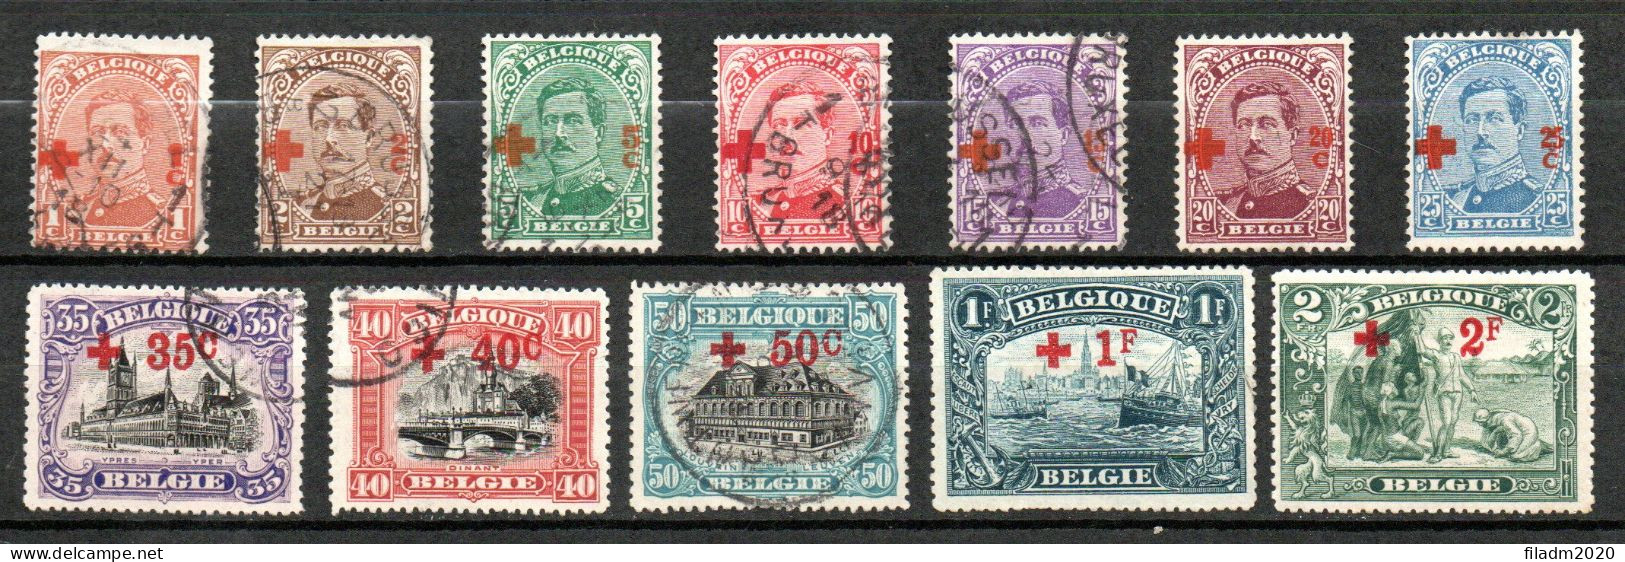 150/161 Gestempeld - Cote 285,00 Euro - 1918 Red Cross